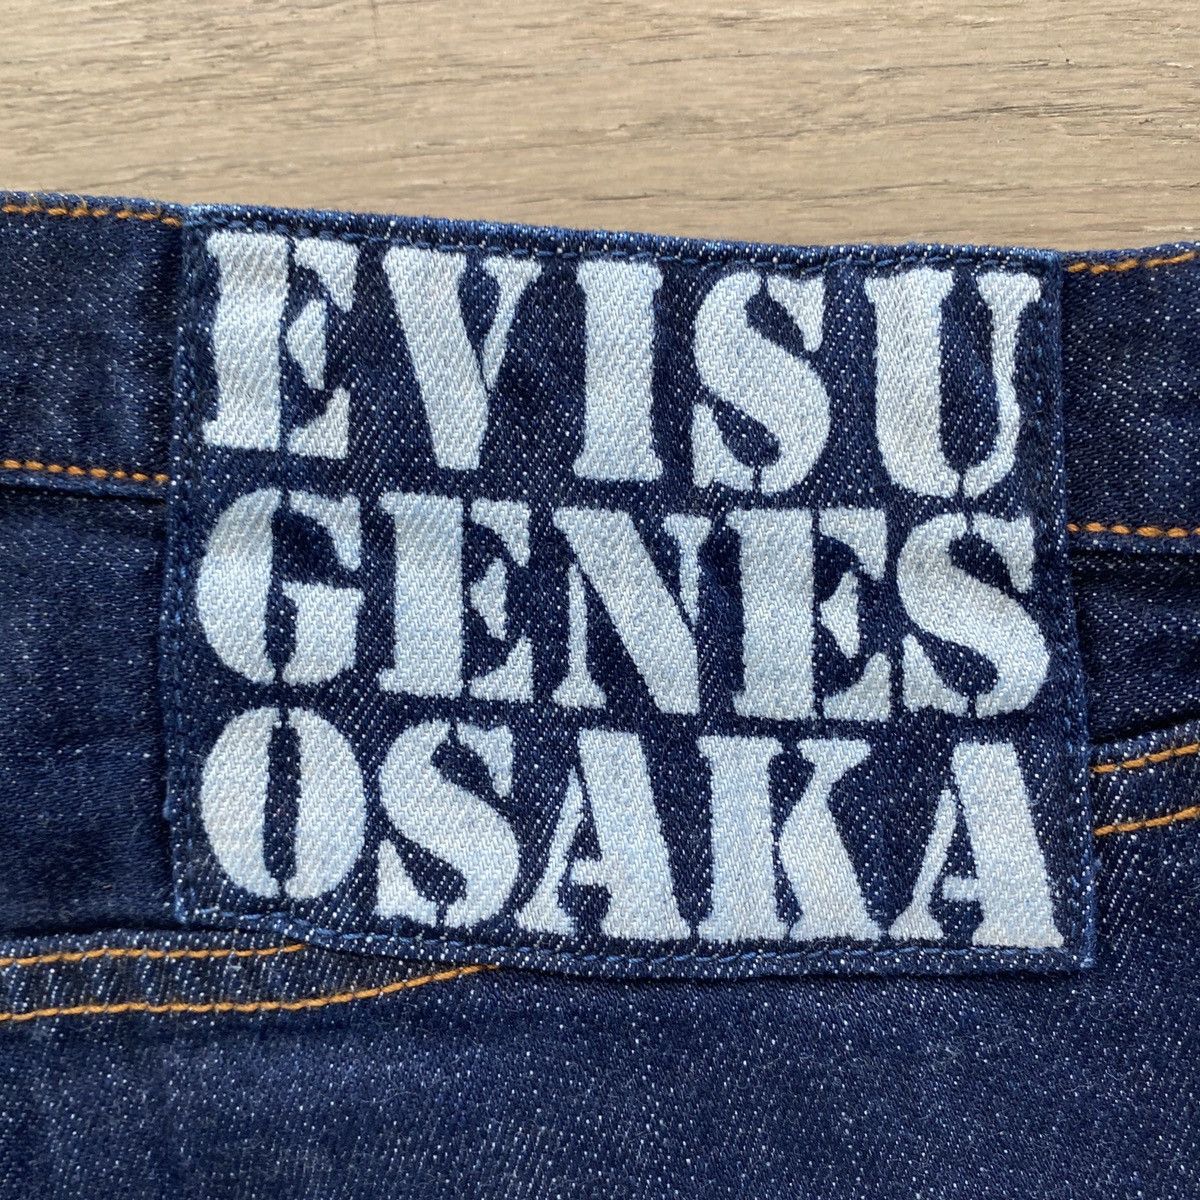 Vintage Evisu Multi Pockets Selvage Denim Jeans (Logo Embroidered) Size US 32 / EU 48 - 7 Thumbnail